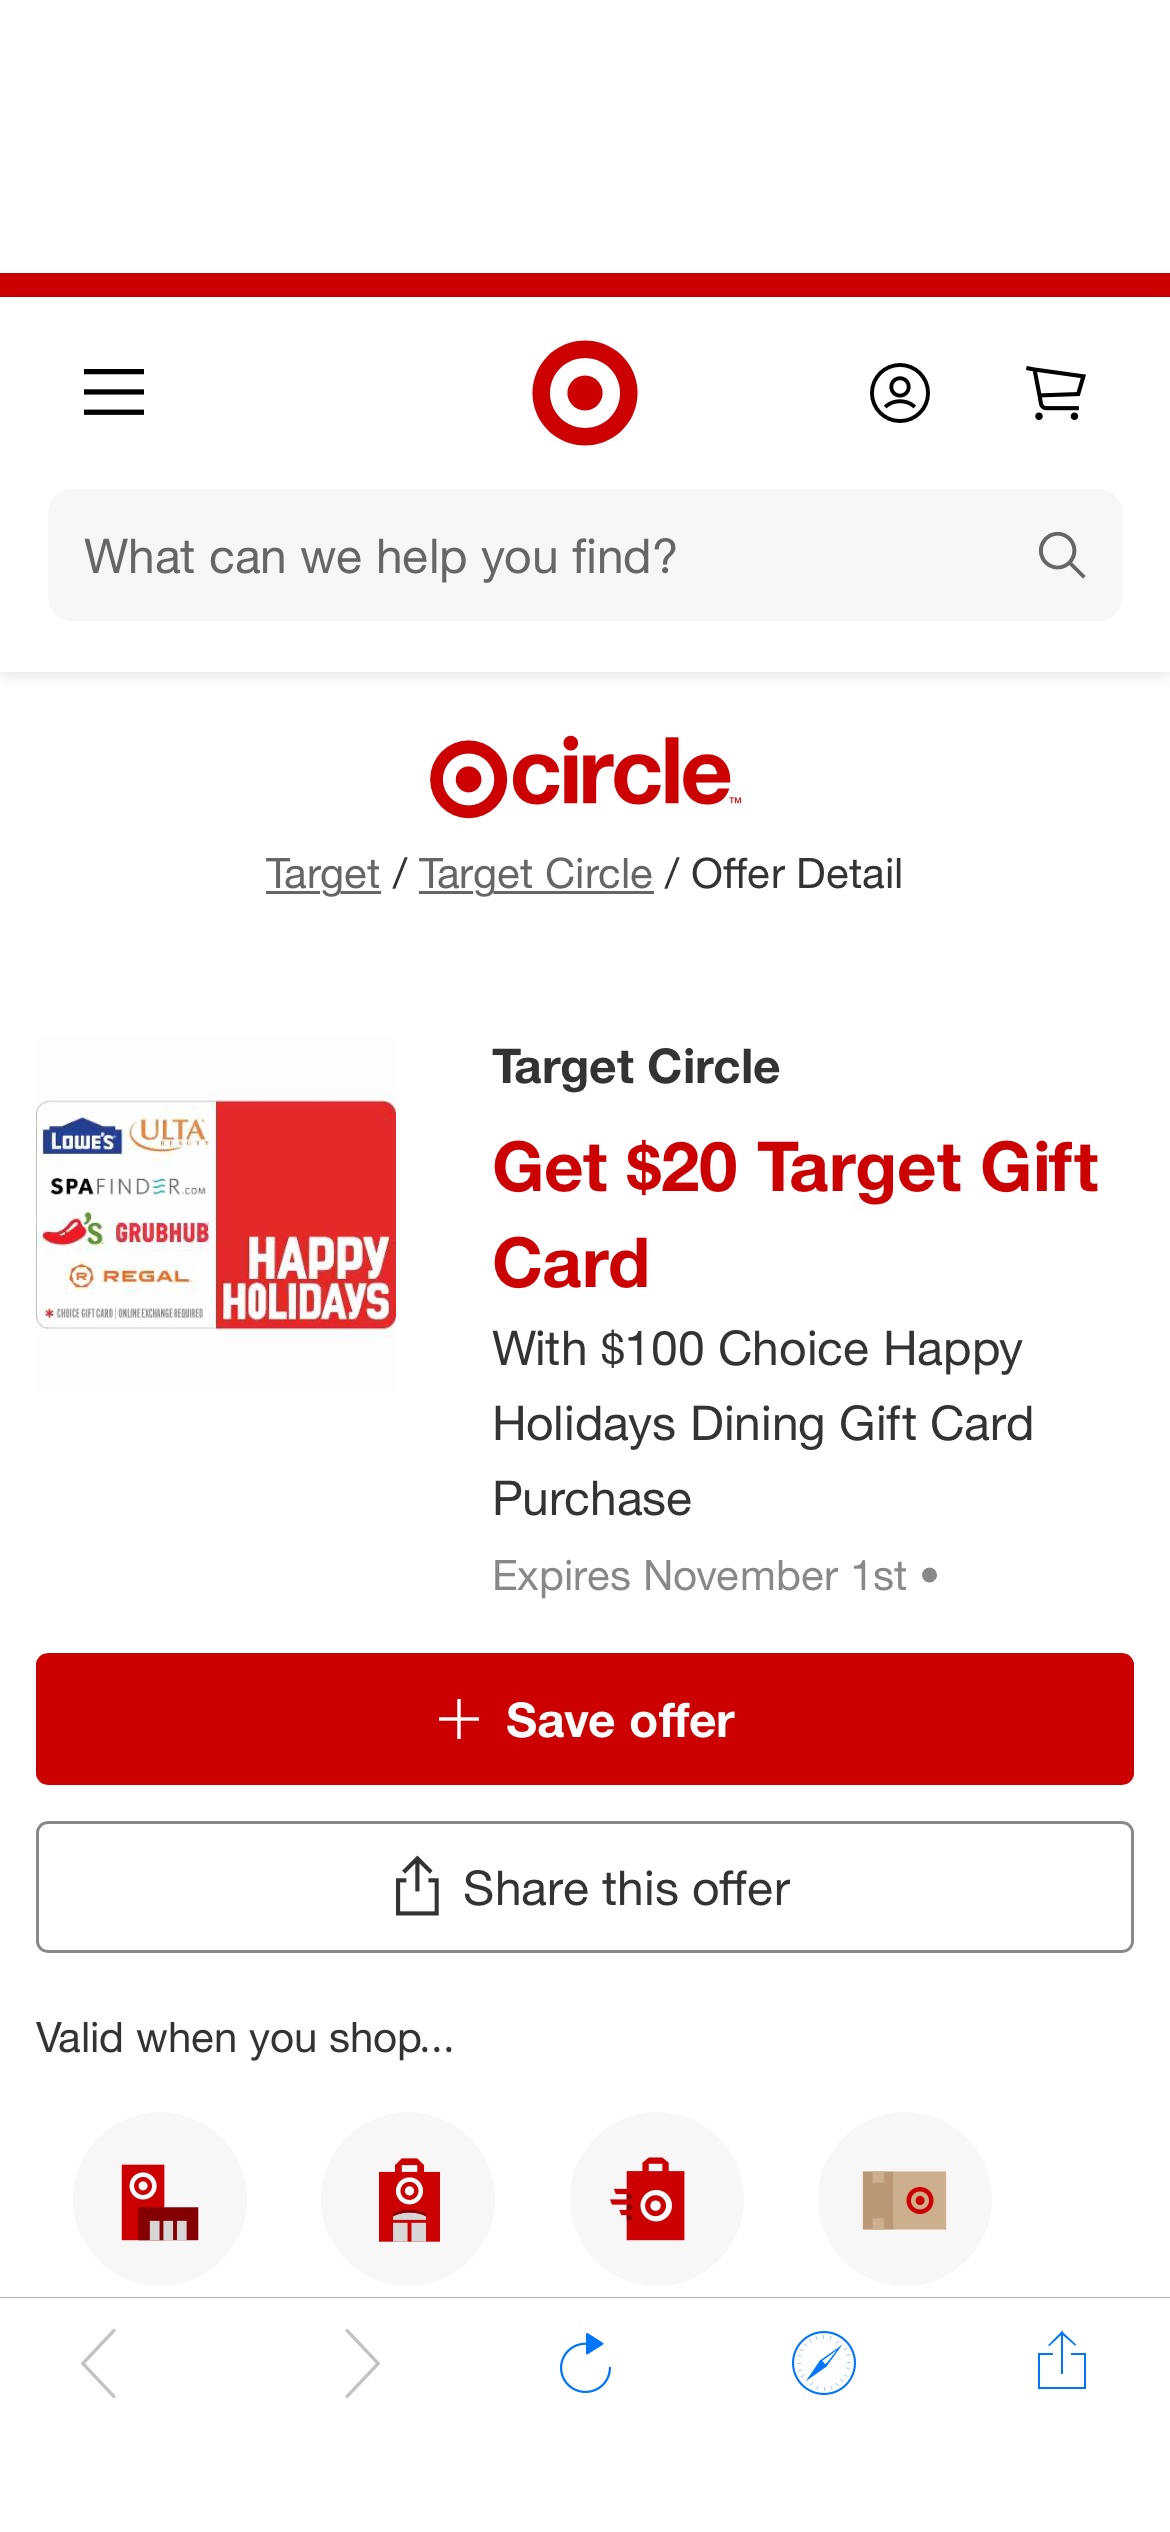 Target happy holidays dinning gift card买100，送20target礼卡